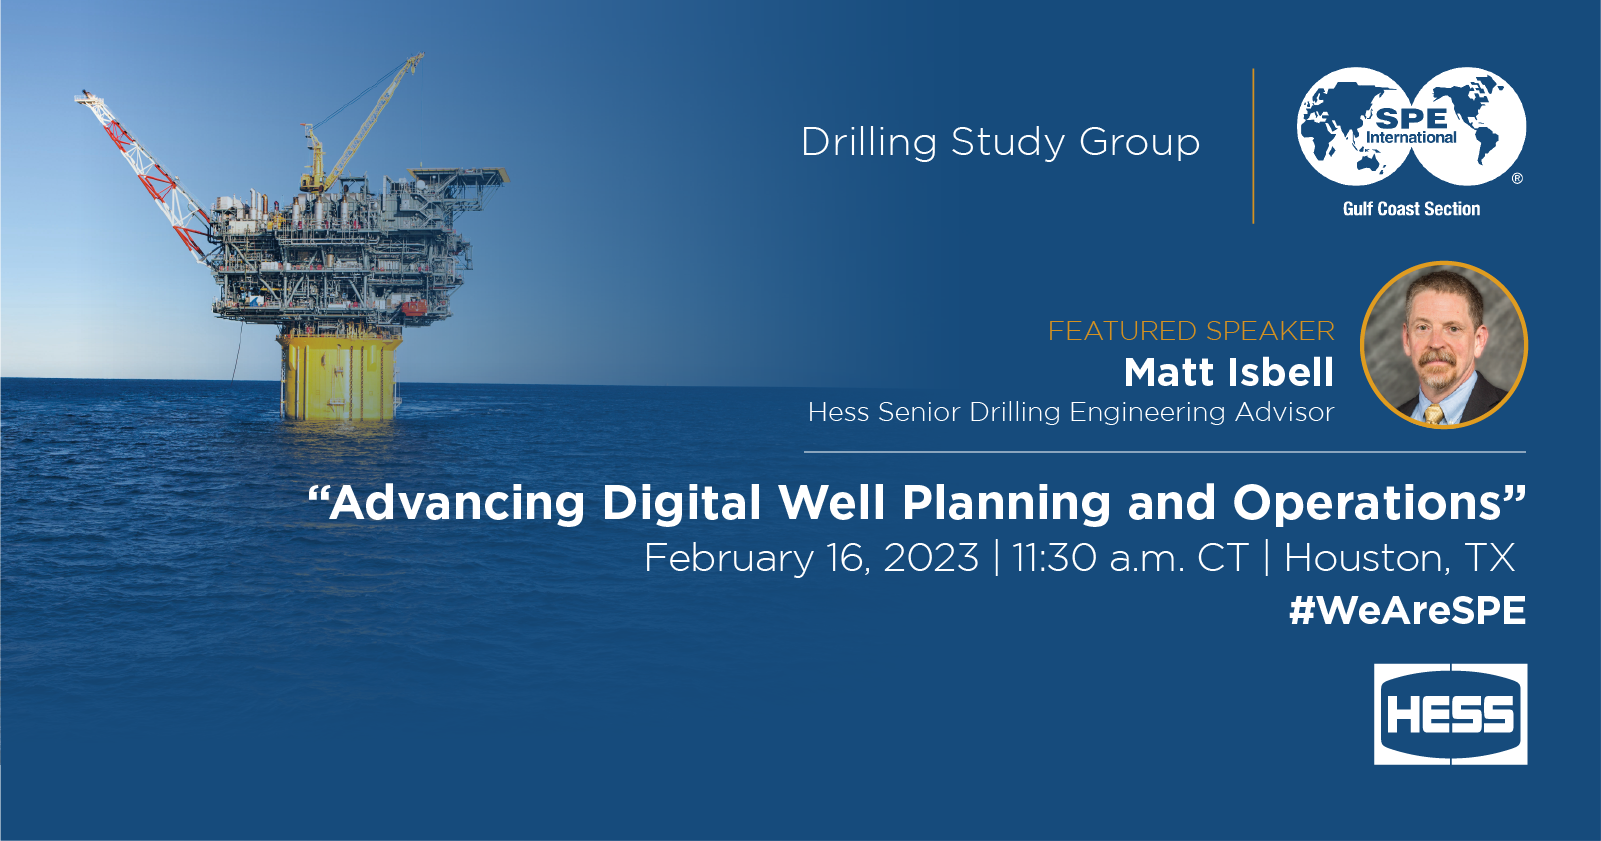 Matt Isbell Featured Speaker at SPE Drilling Study Group